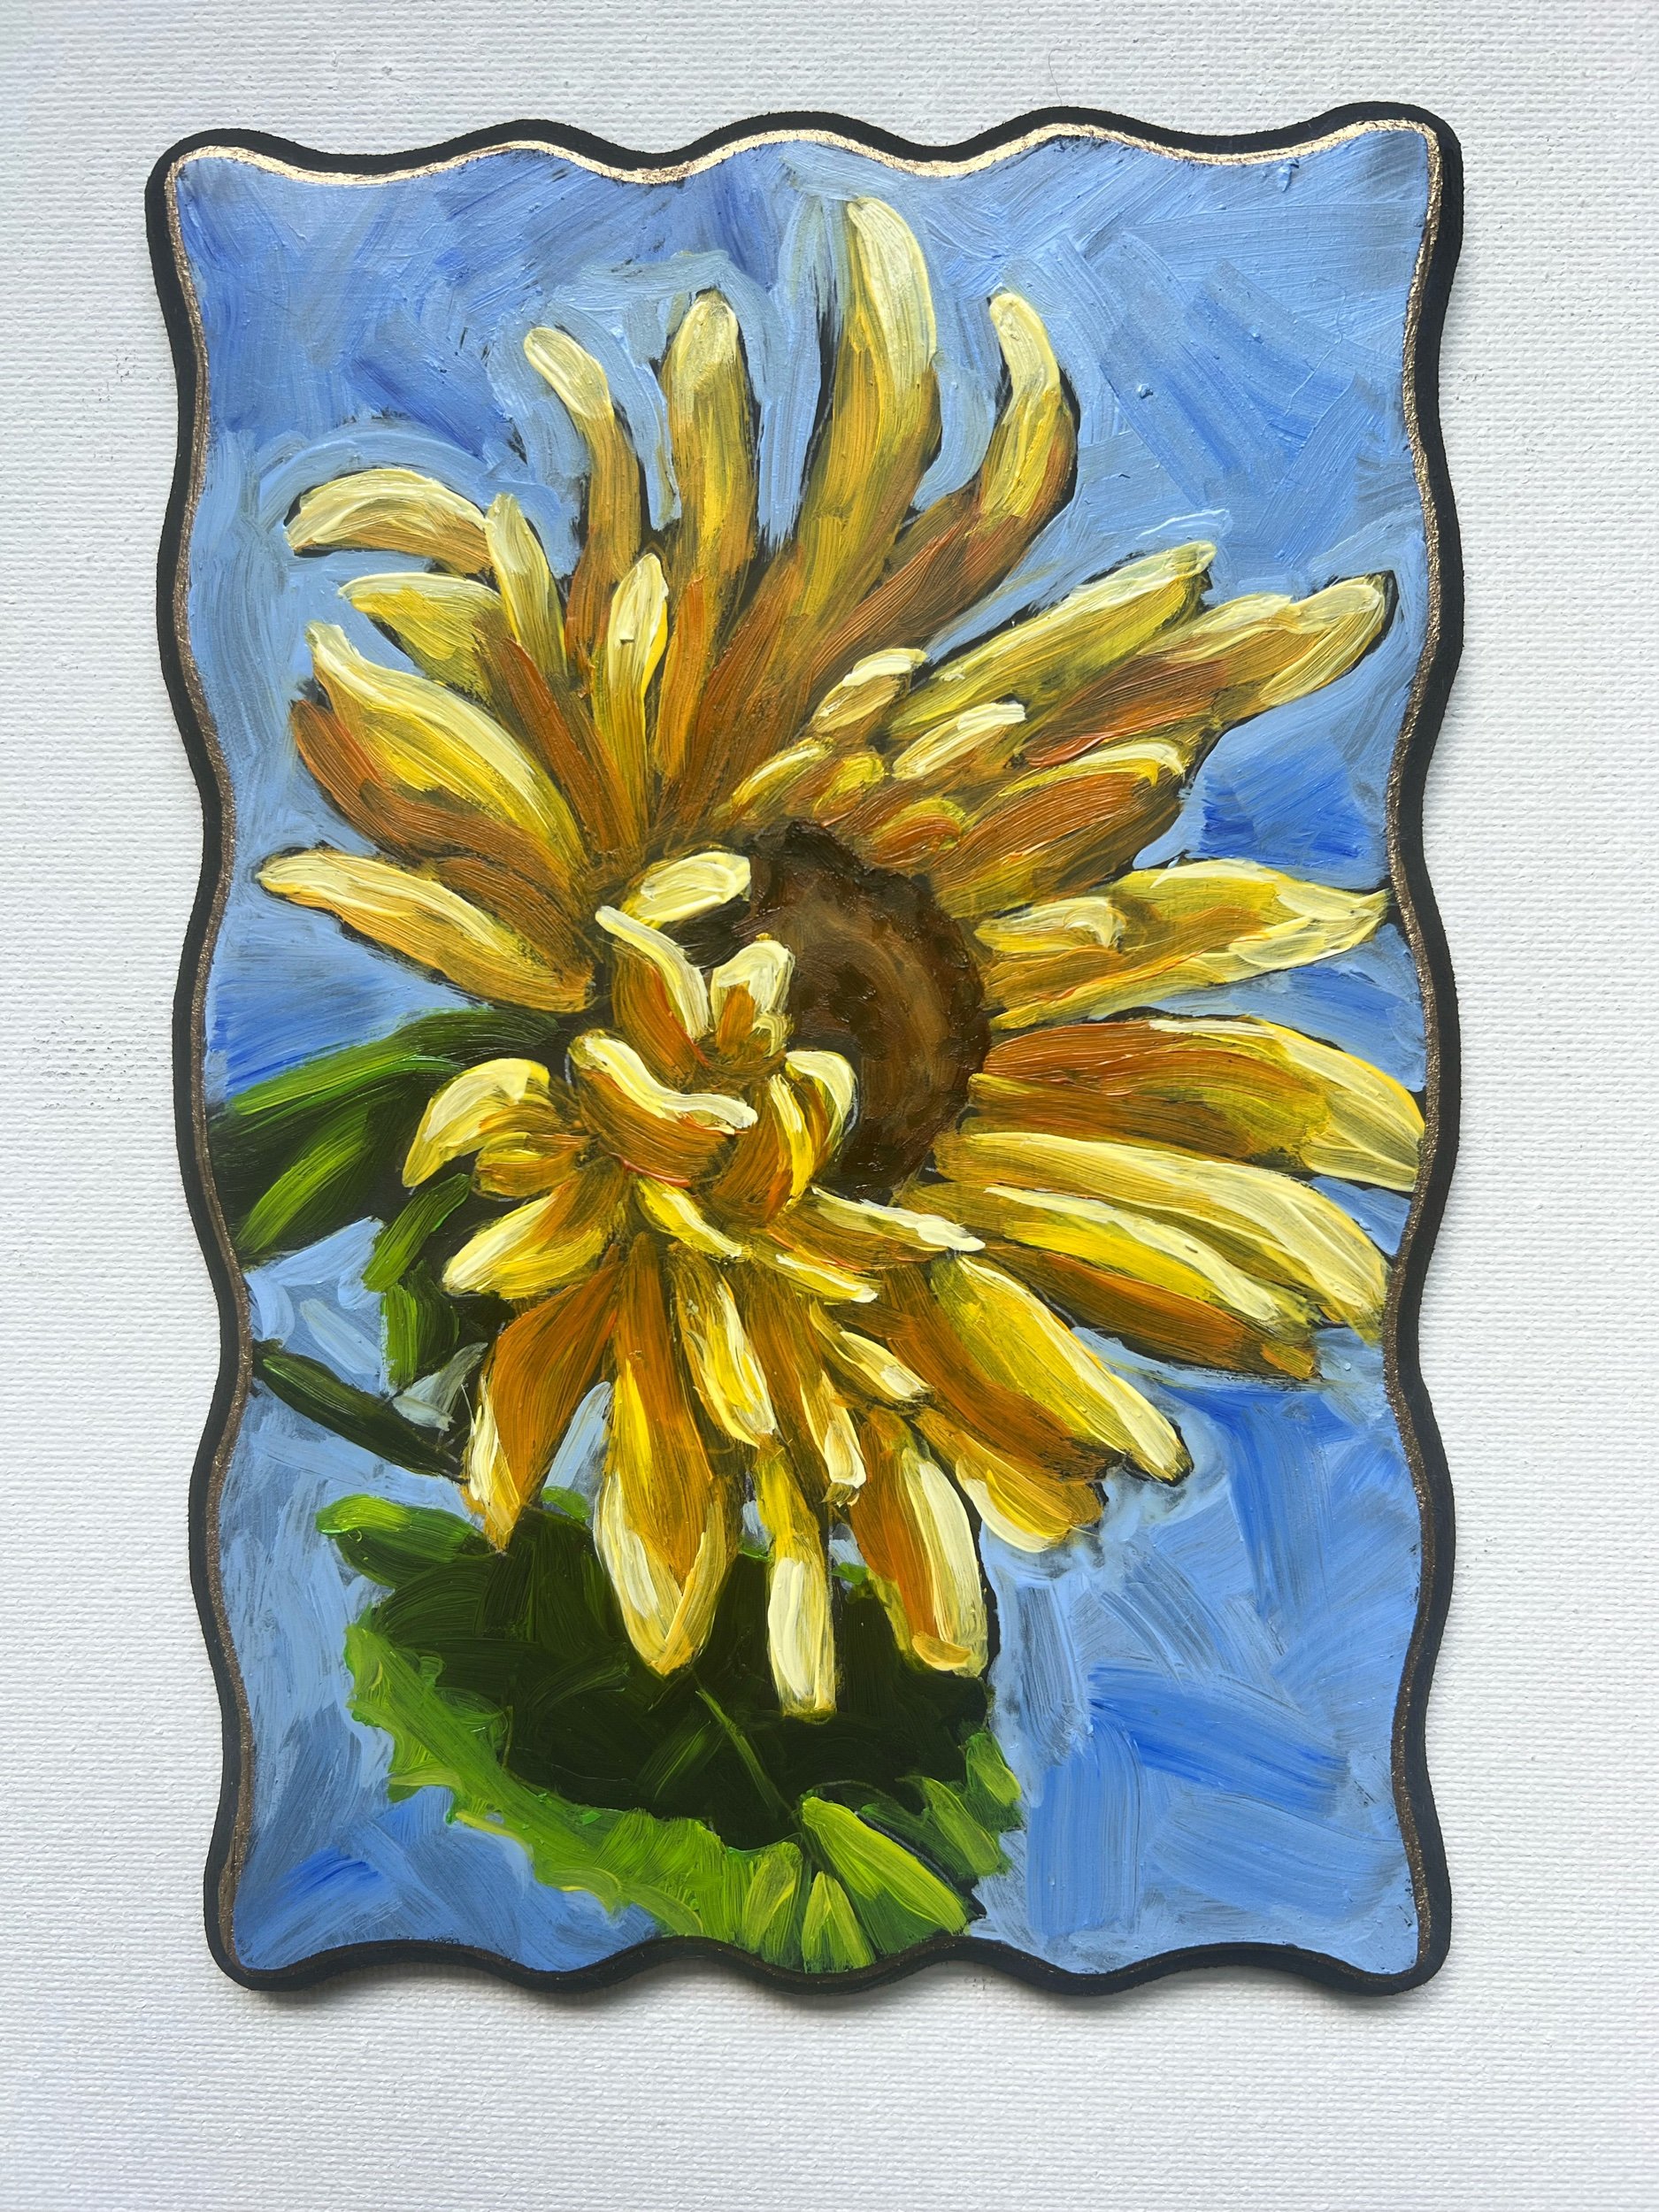 Sunflower 5x7”, oil